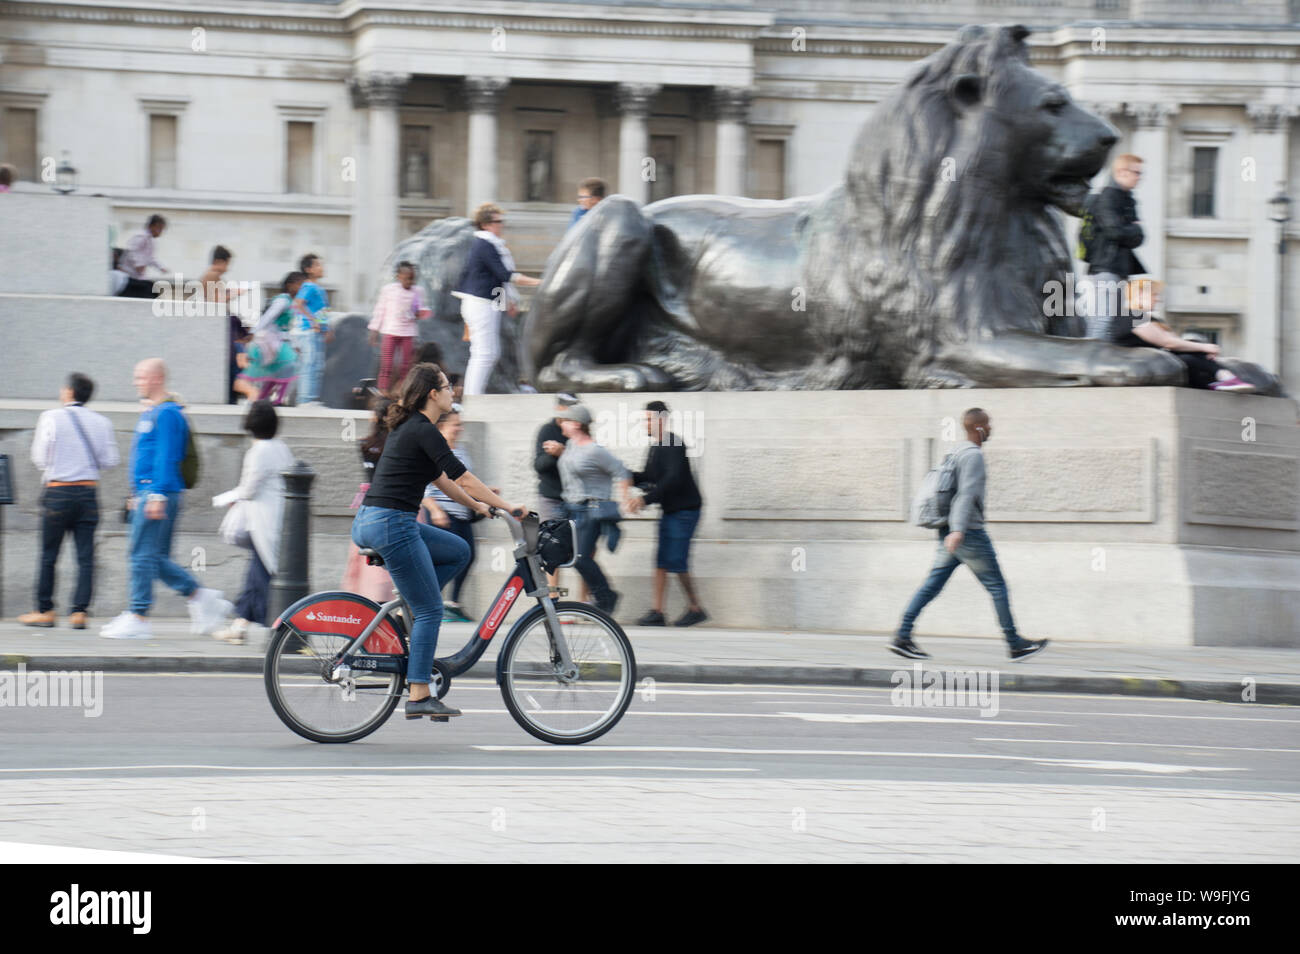 Woman riding bike in London trafalgar square using Santander bike sharing Stock Photo